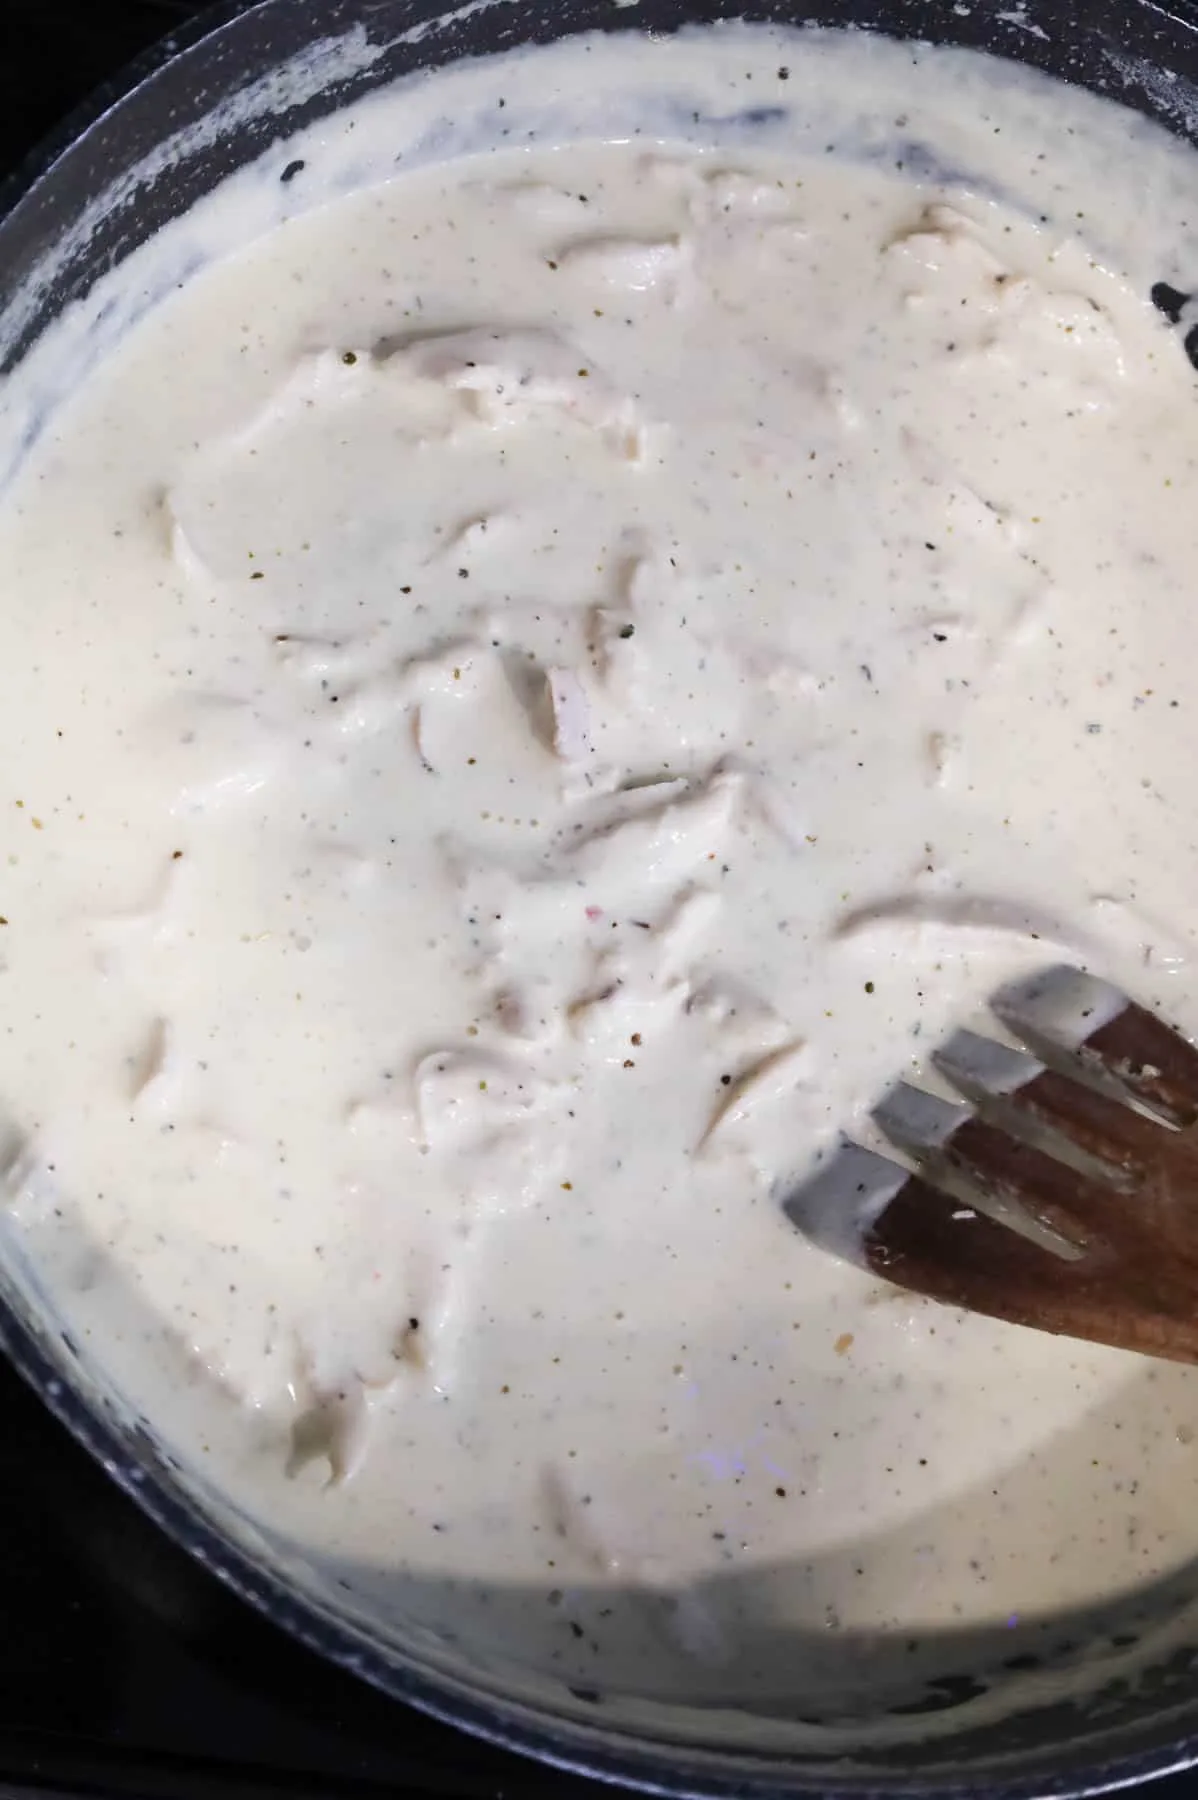 shredded chicken being stirred into cream sauce in a skillet